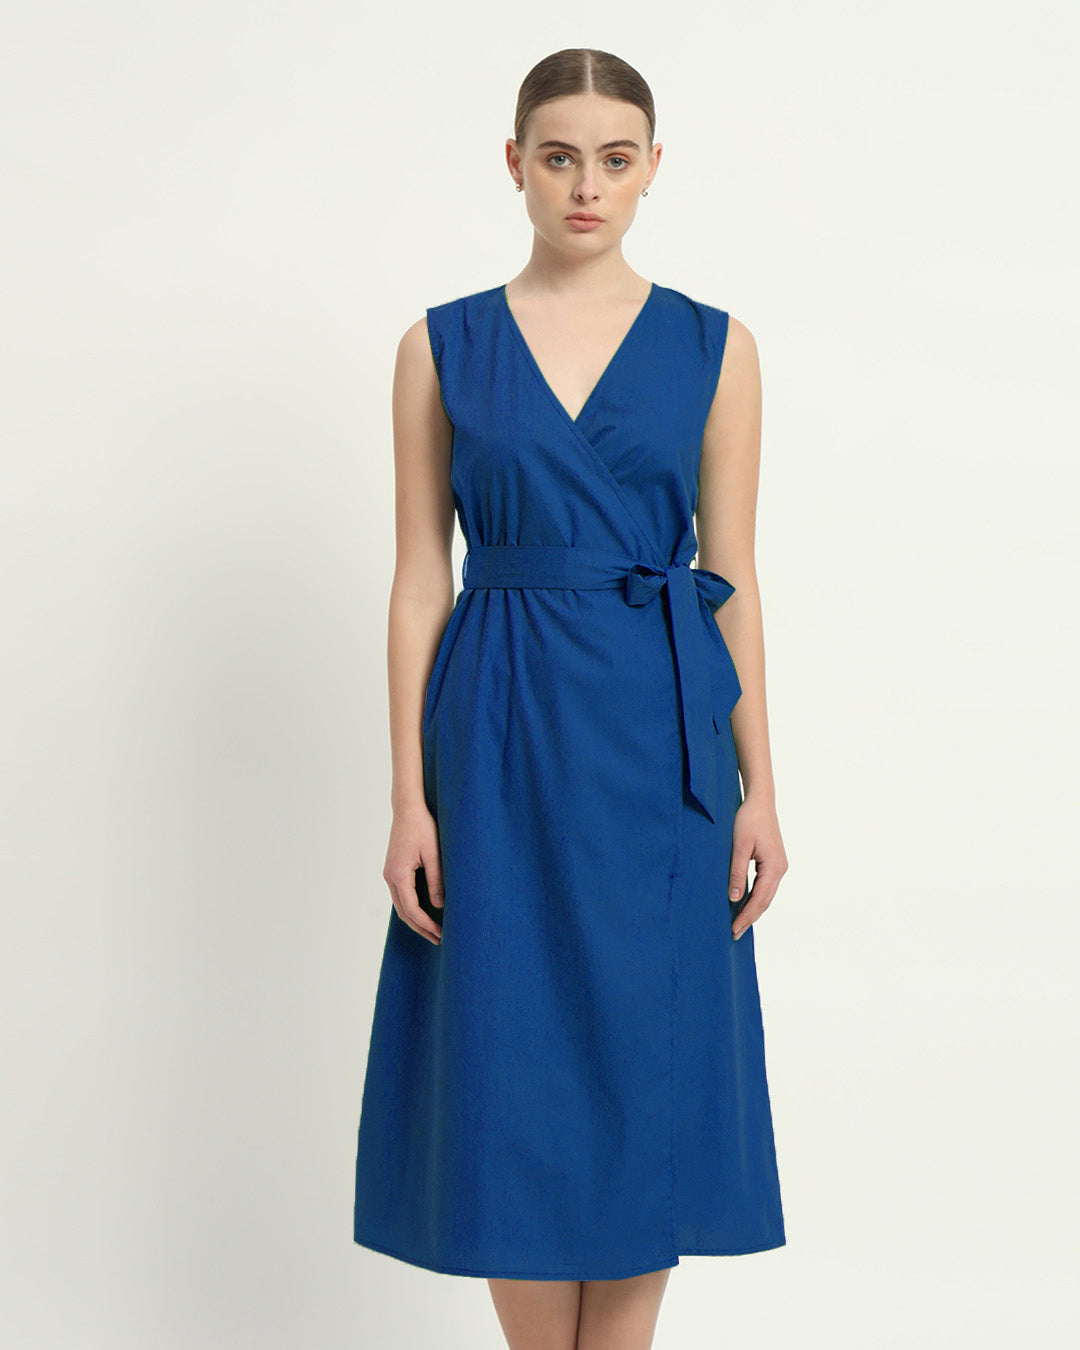 The Cobalt Windsor Cotton Dress